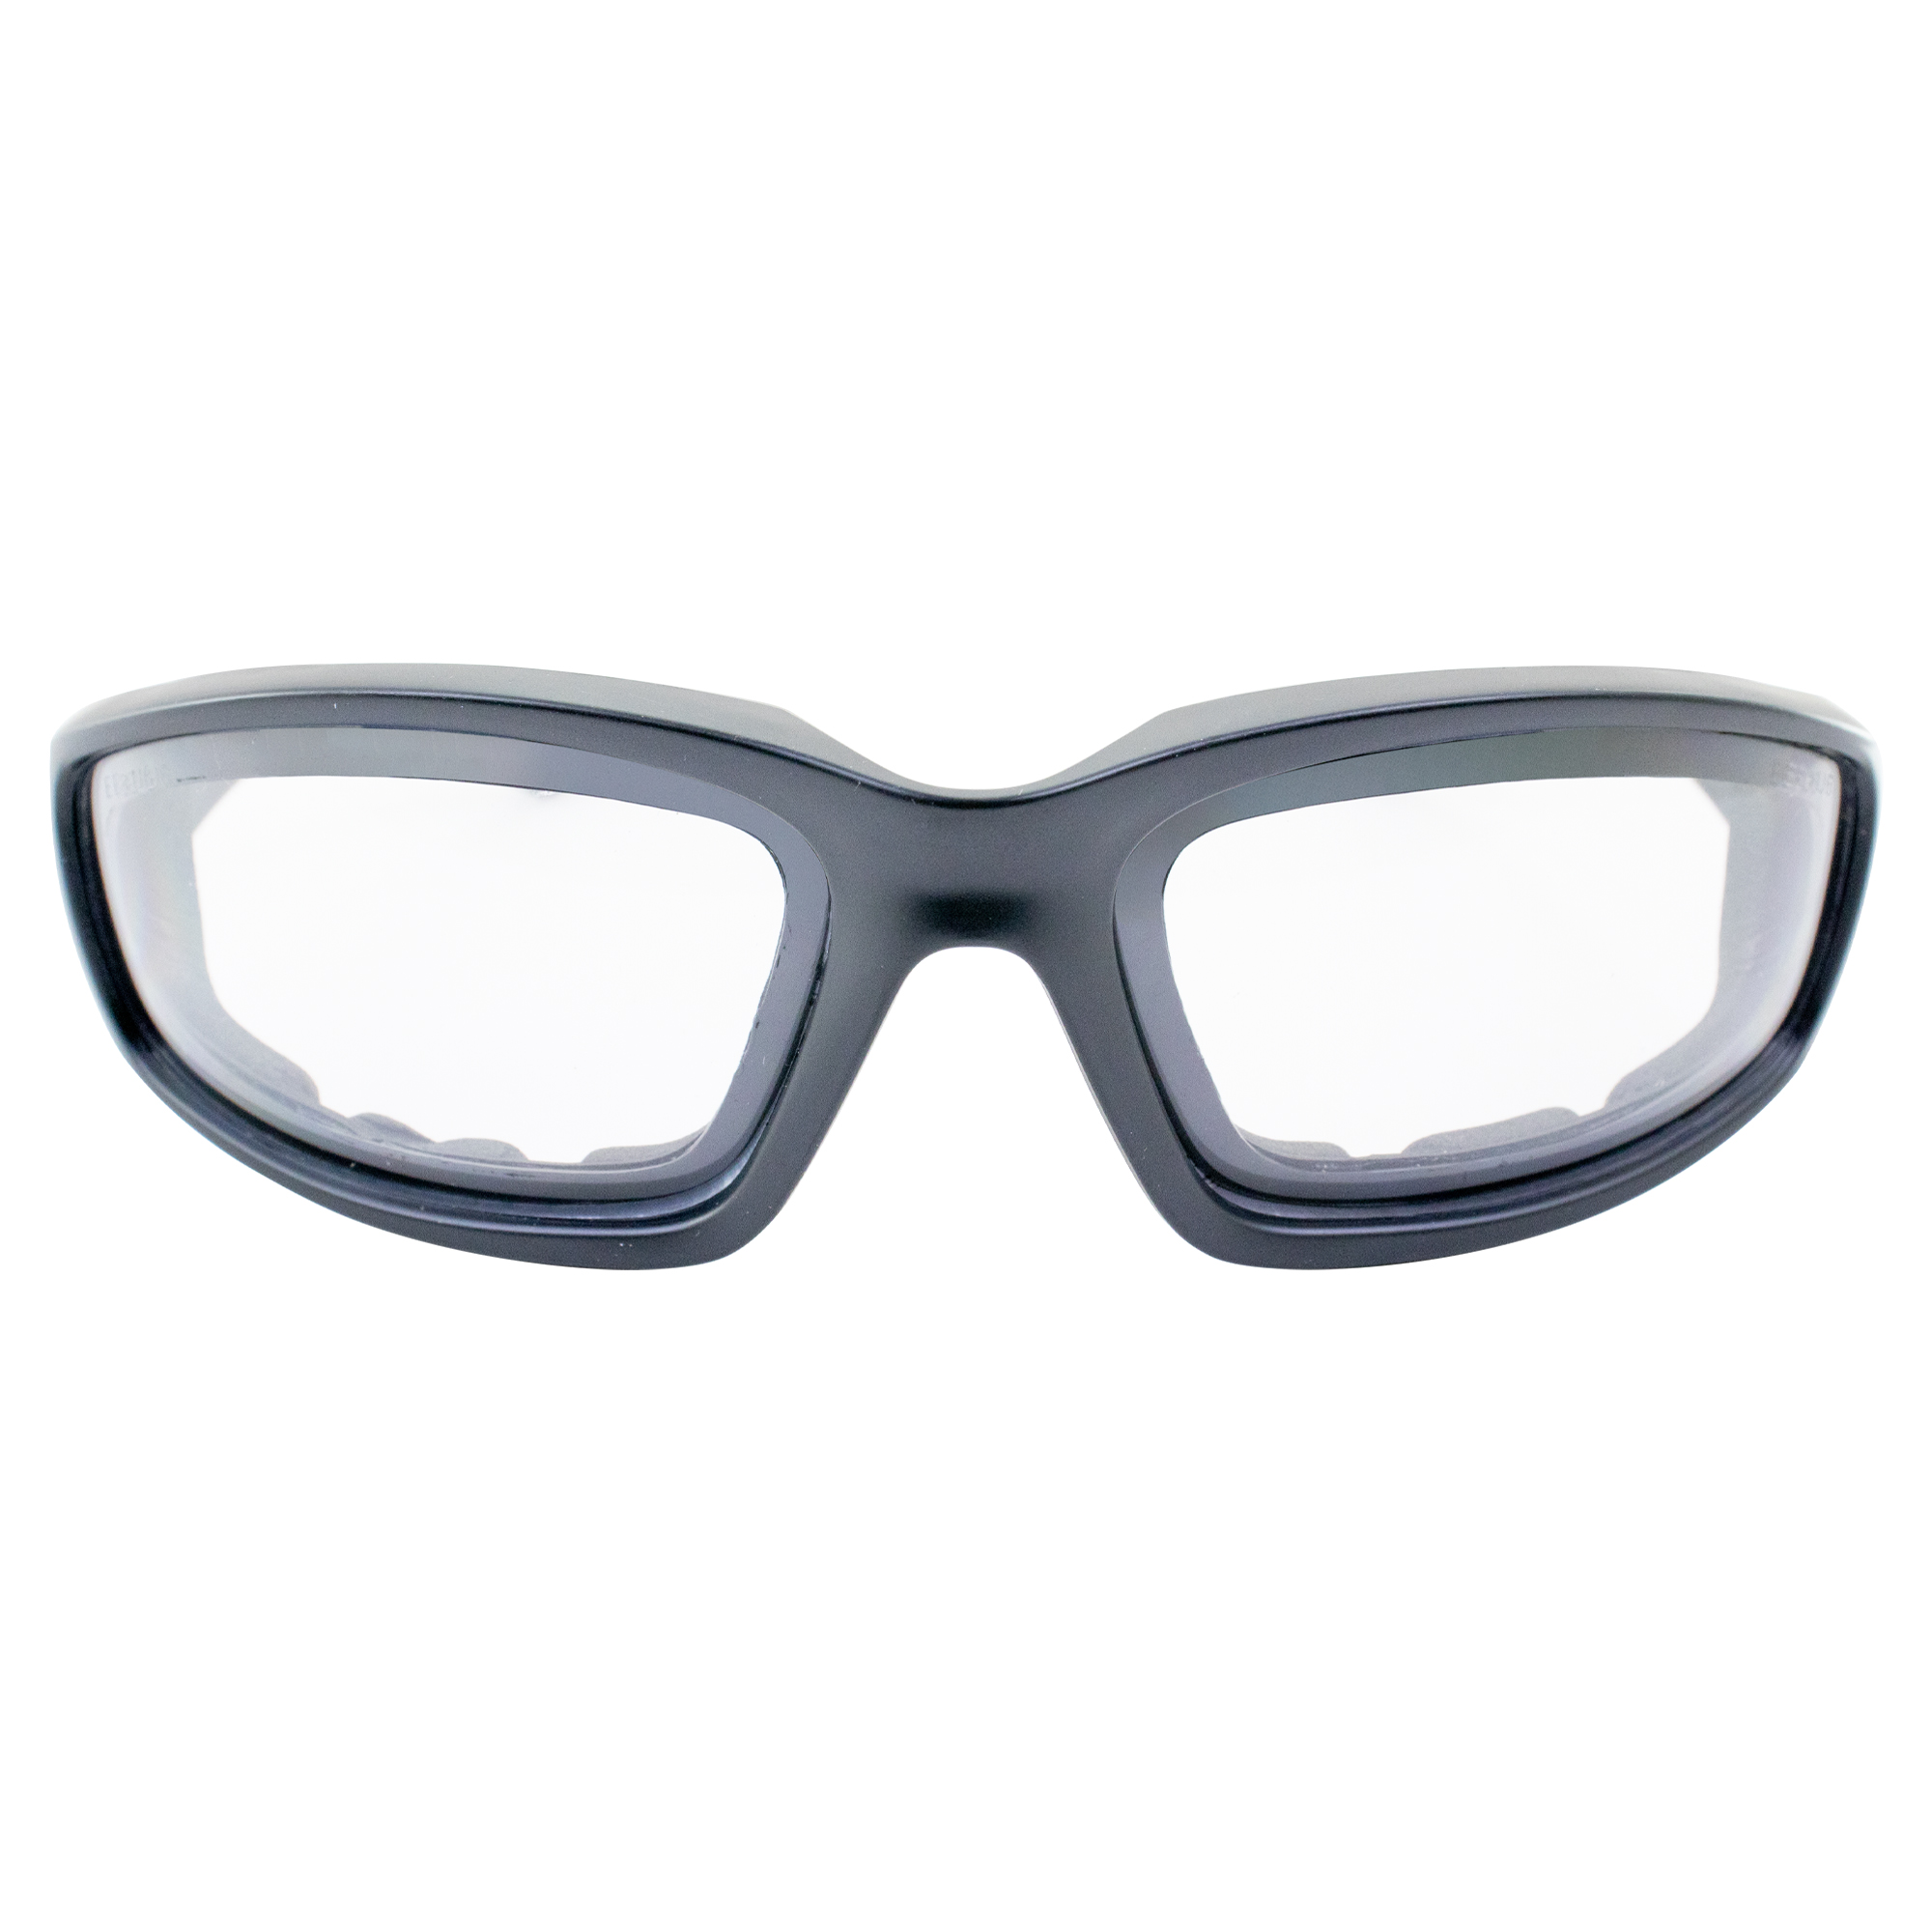 EPOCH Padded Motorcycle Sunglasses Black Frames Clear Lens ANSI Z87.1+ - image 2 of 8